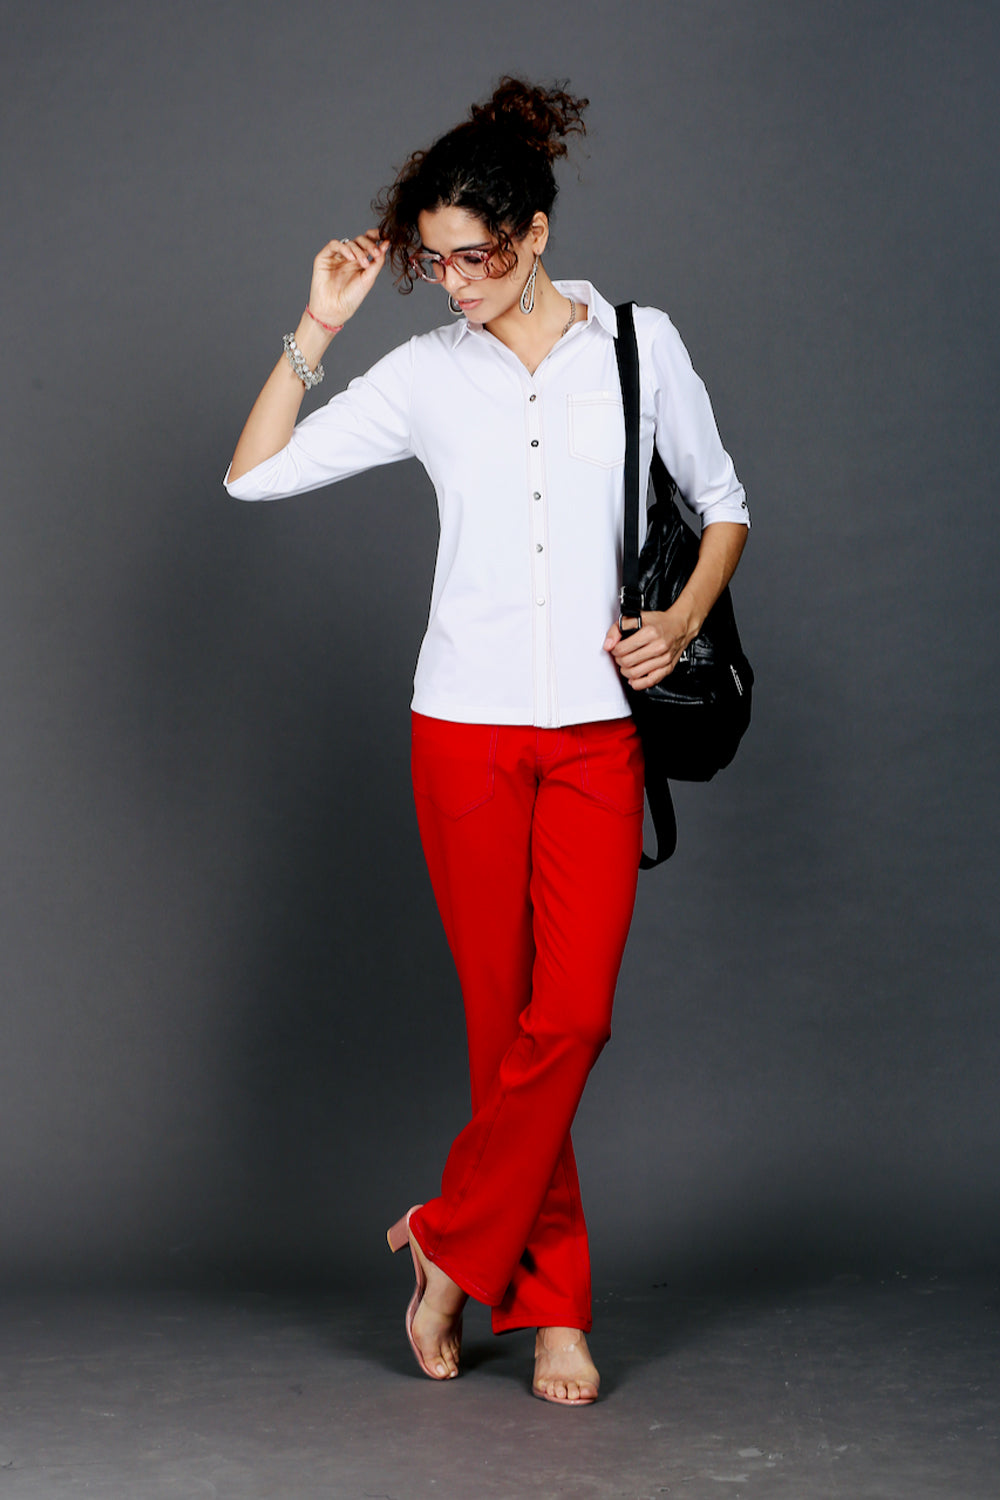 Dana Hourani Lado Bokuchava round silhouette red shirt , black pants,...  News Photo - Getty Images